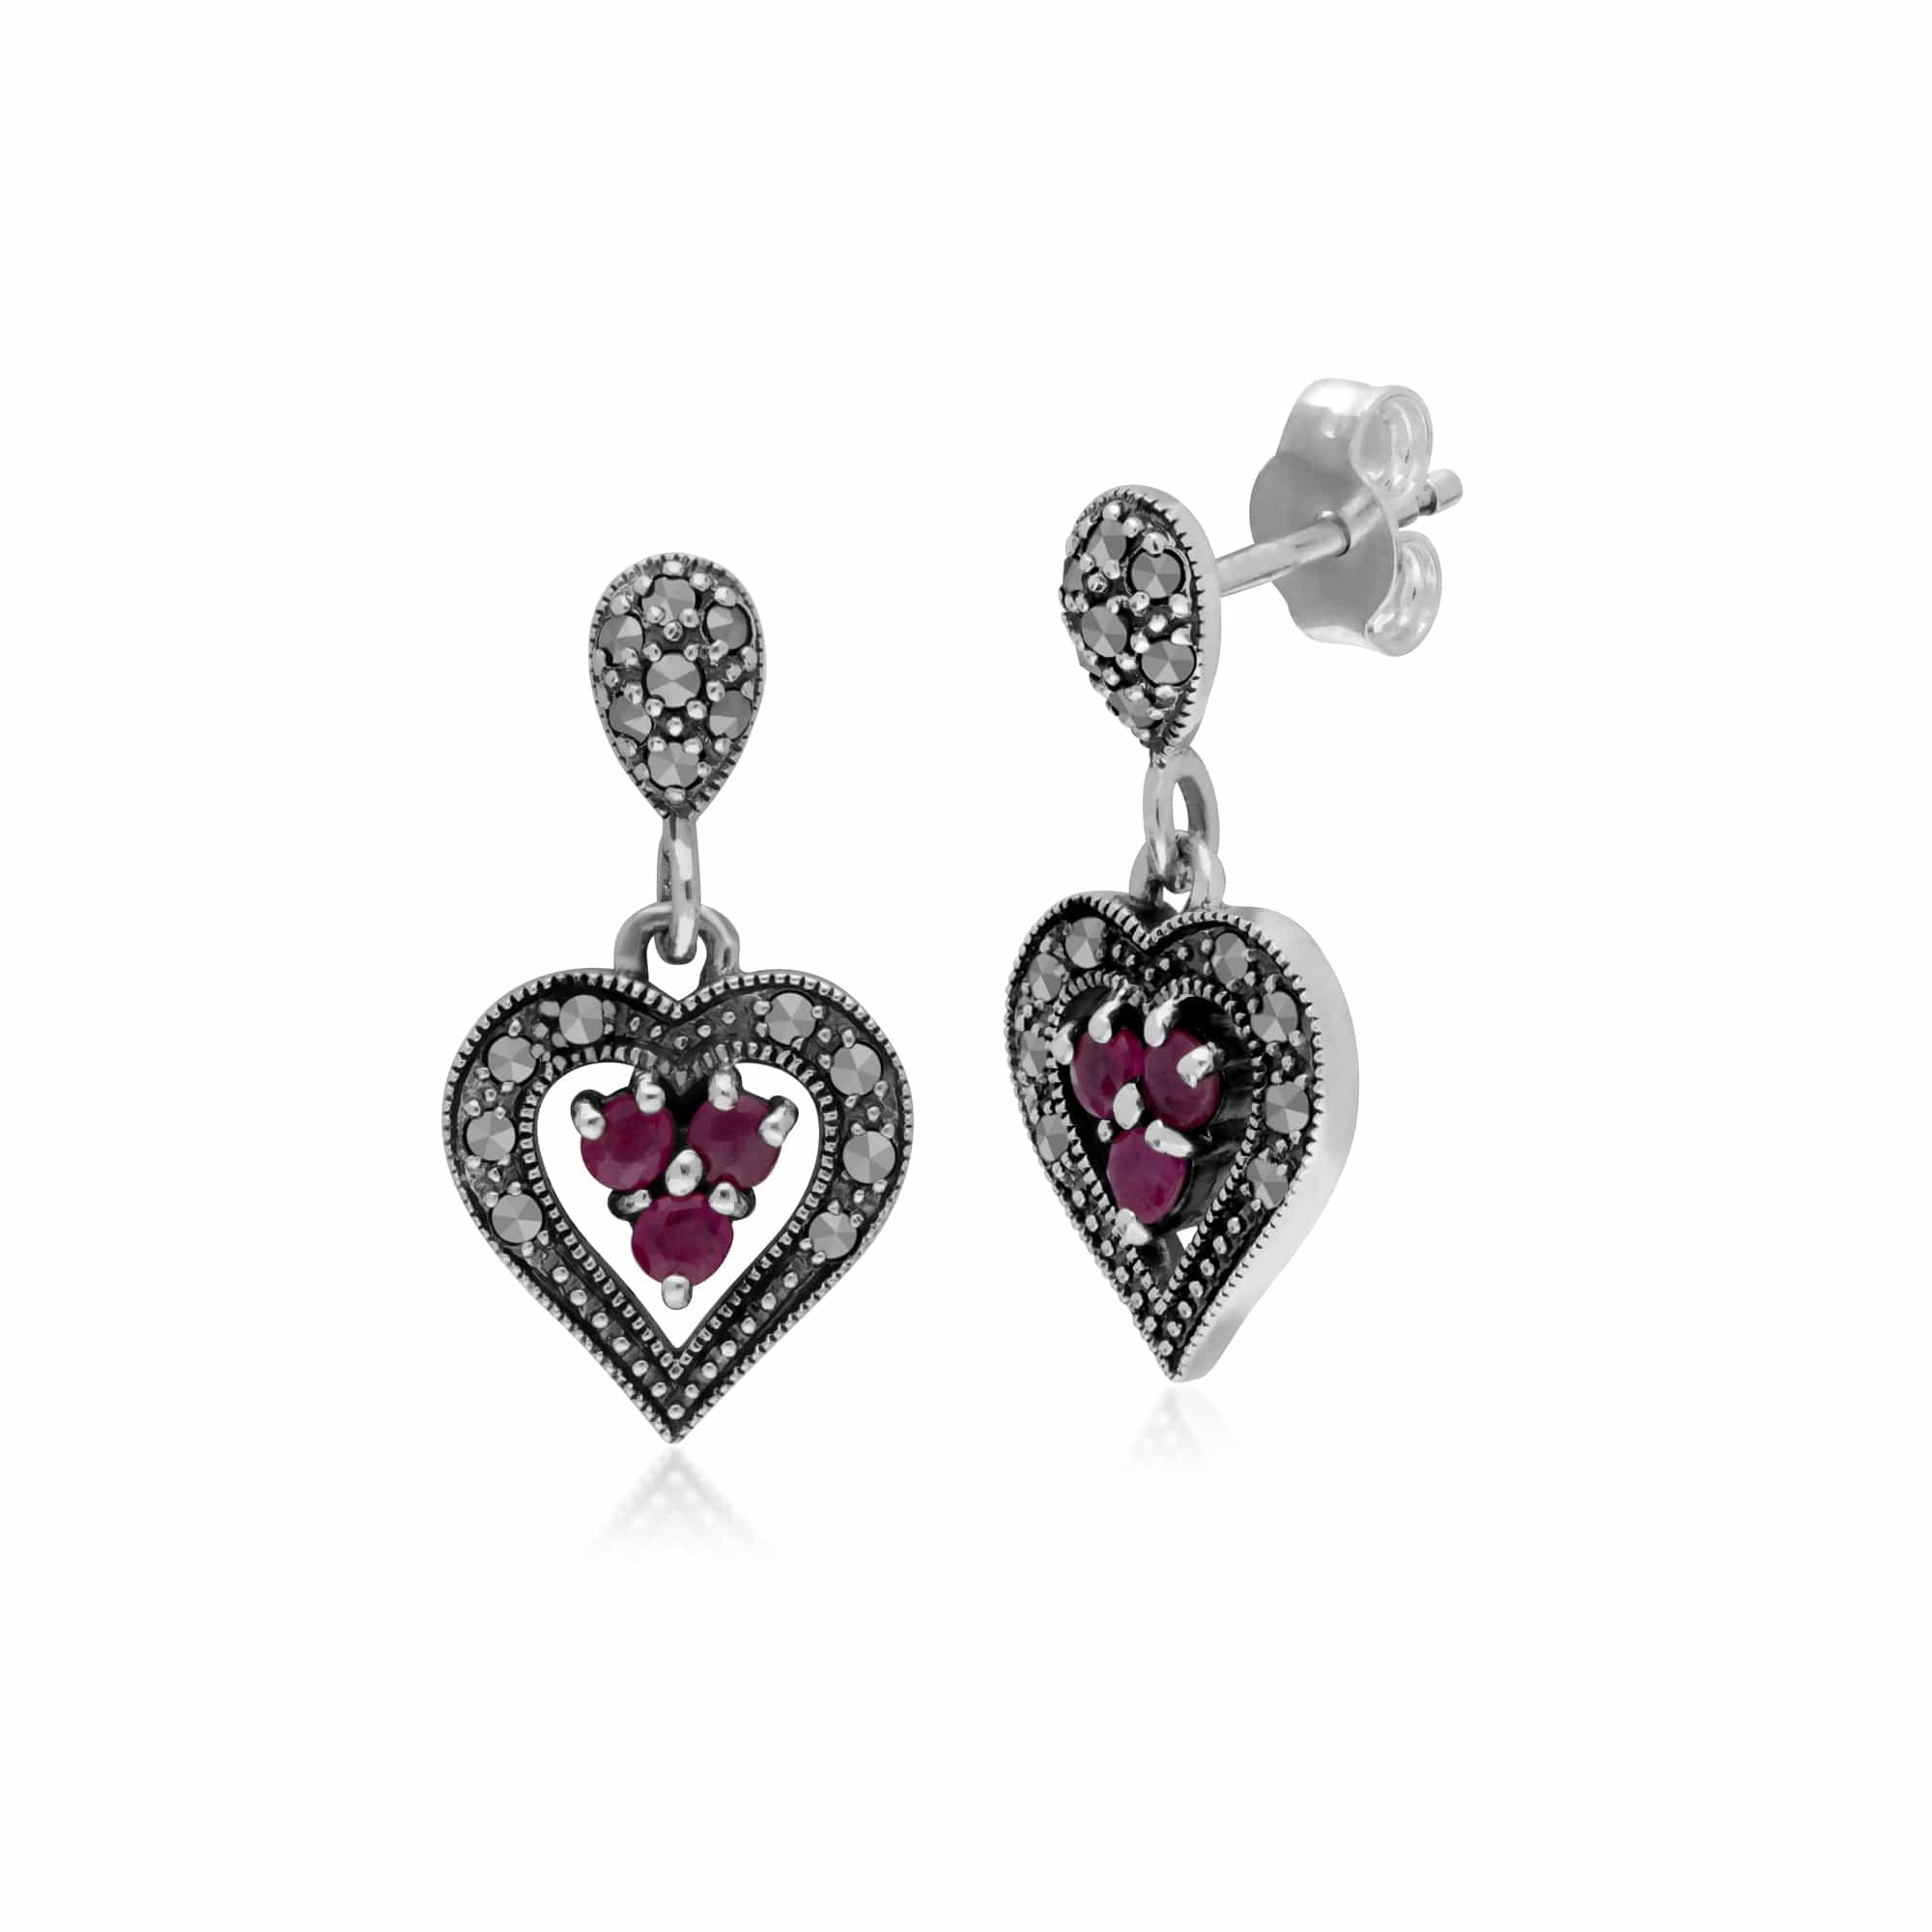 214E616102925 Art Deco Style  Round Ruby & Marcasite Heart Drop Earrings in 925 Sterling Silver 1